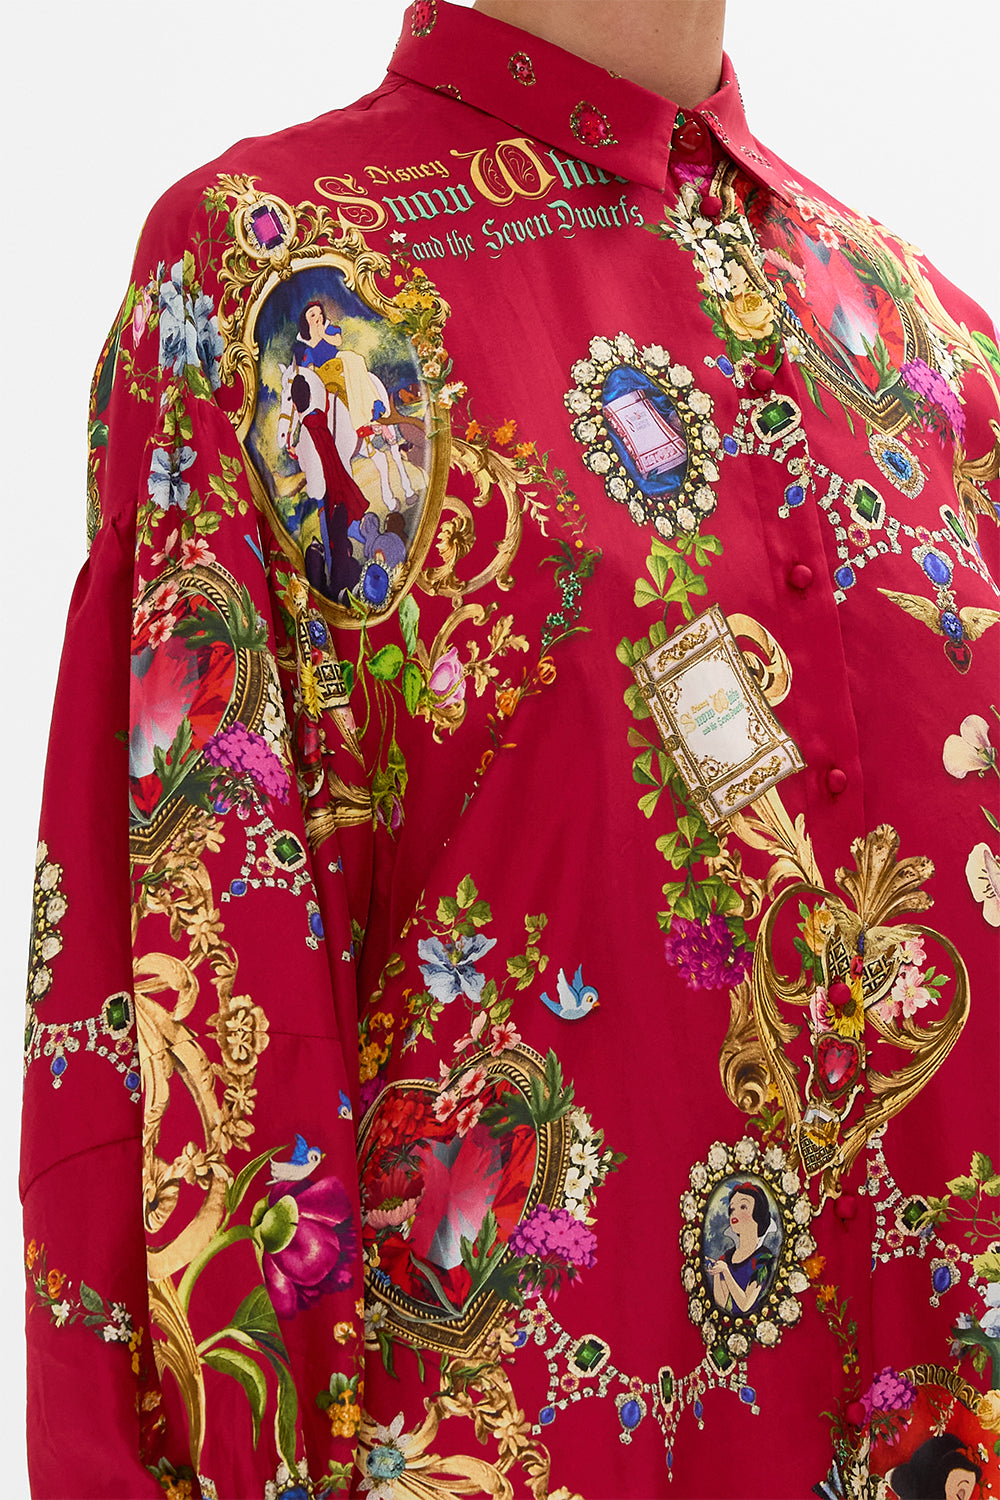 Disney CAMILLA silk blouse in Just One Bite Snow White print